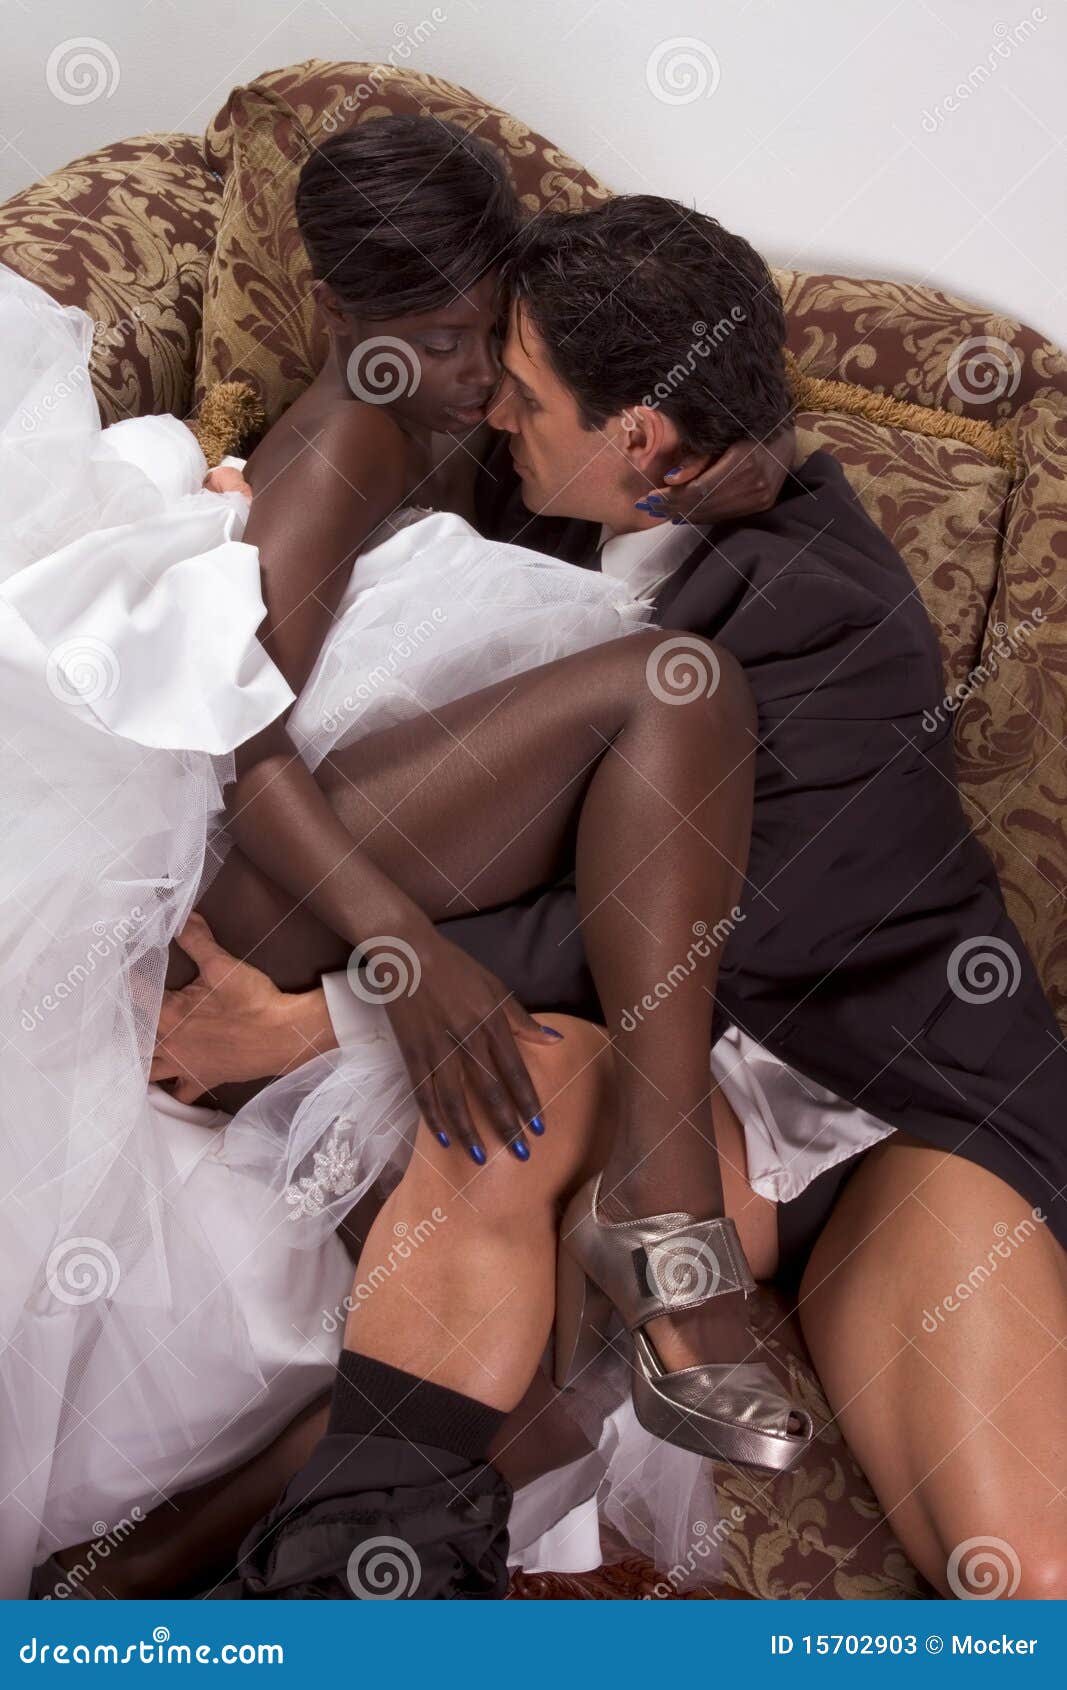 Interracial sex pictures